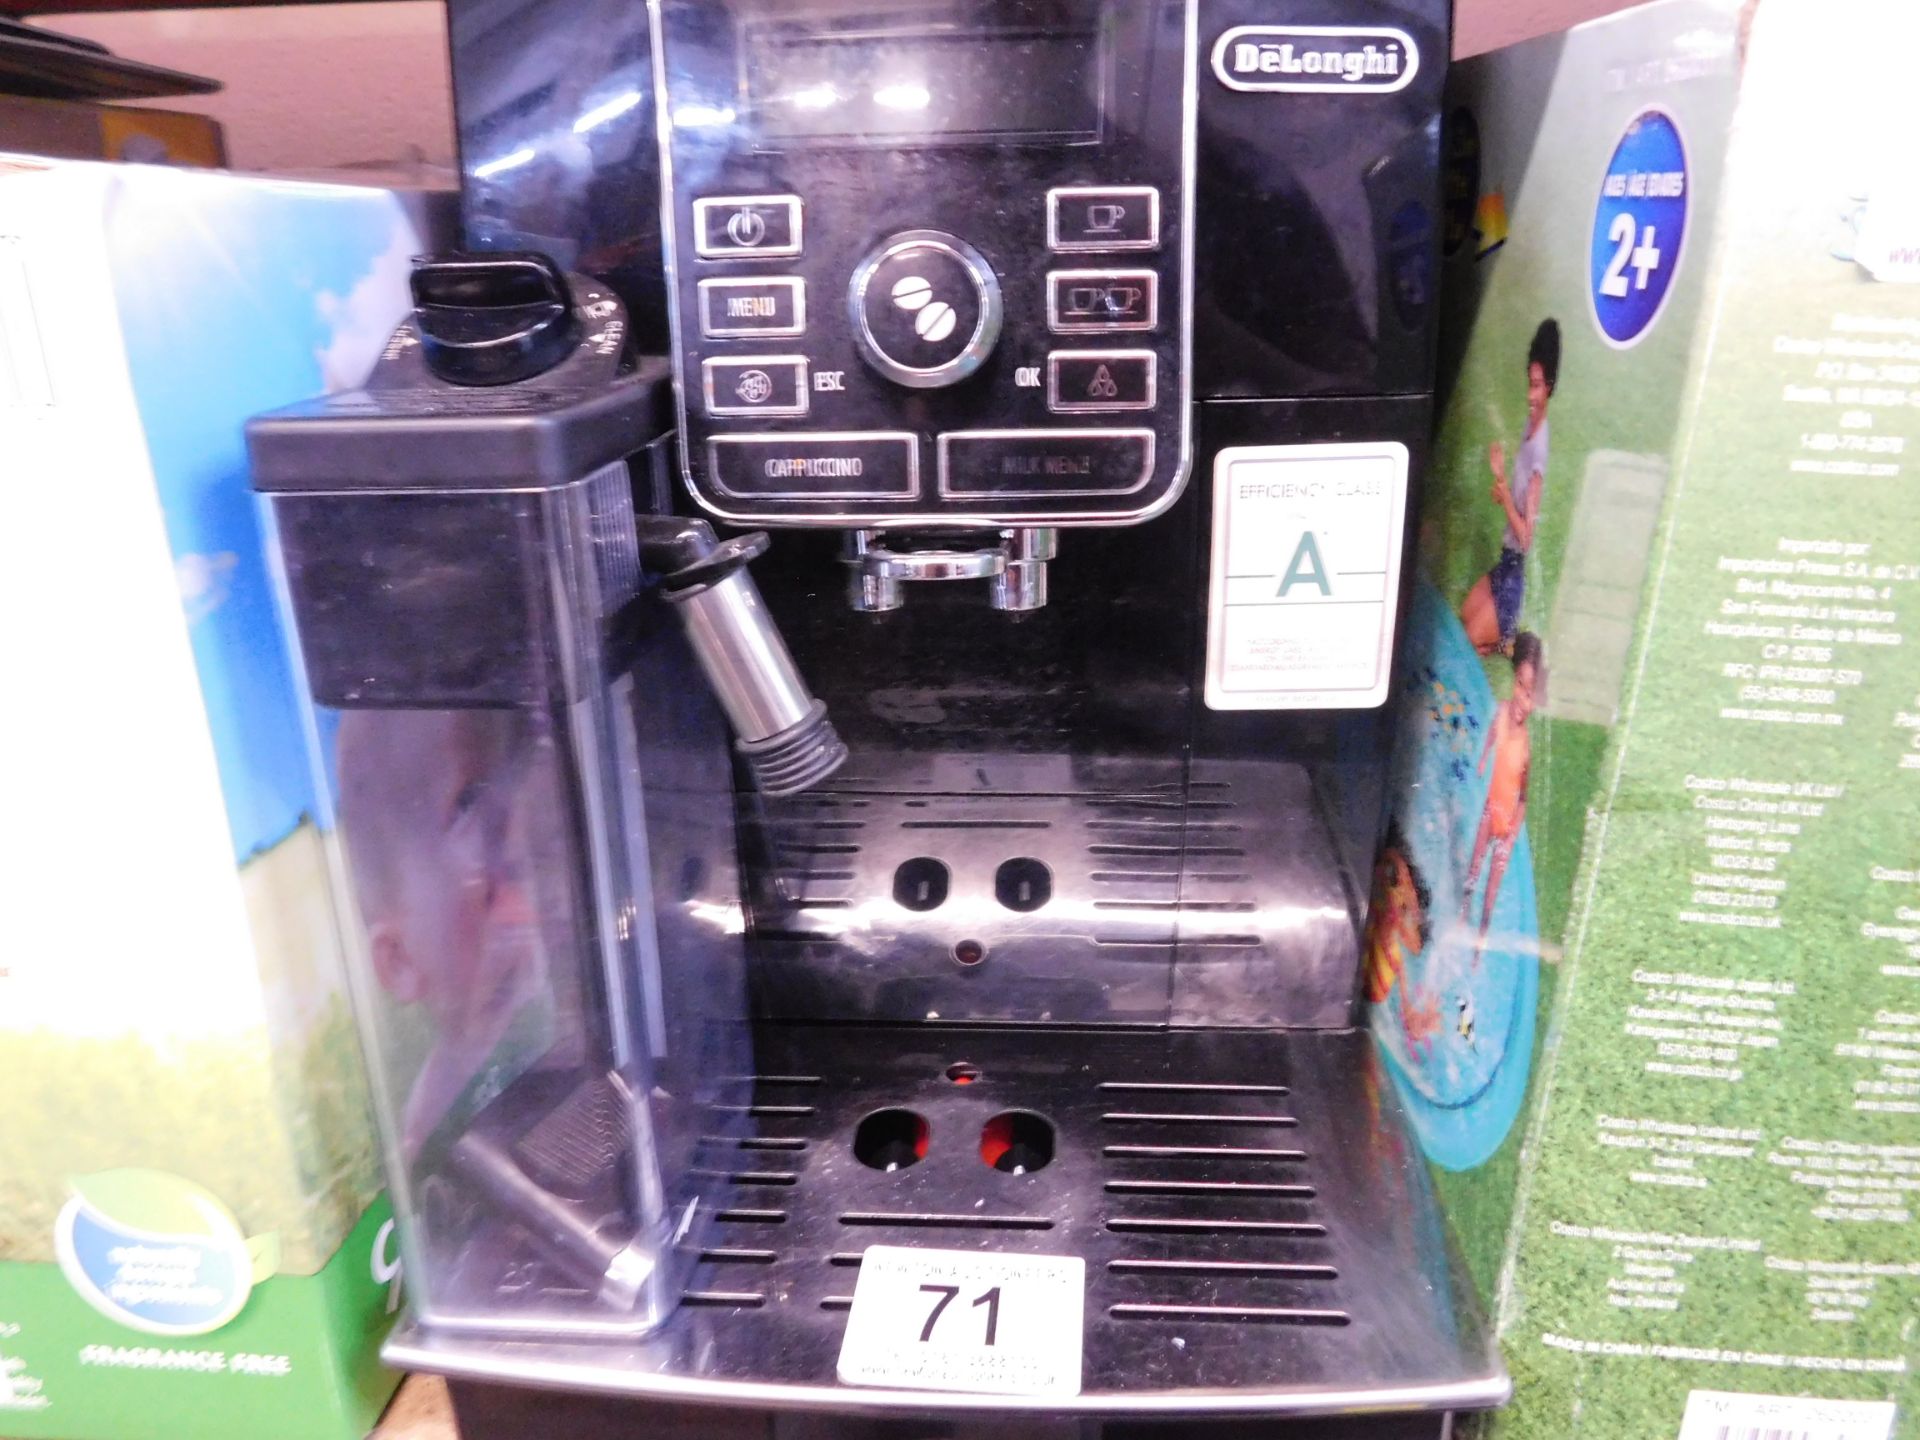 1 DELONGHI MAGNIFICA BEAN TO CUP COFFEE MACHINE ECAM25.462.B RRP Â£425.99